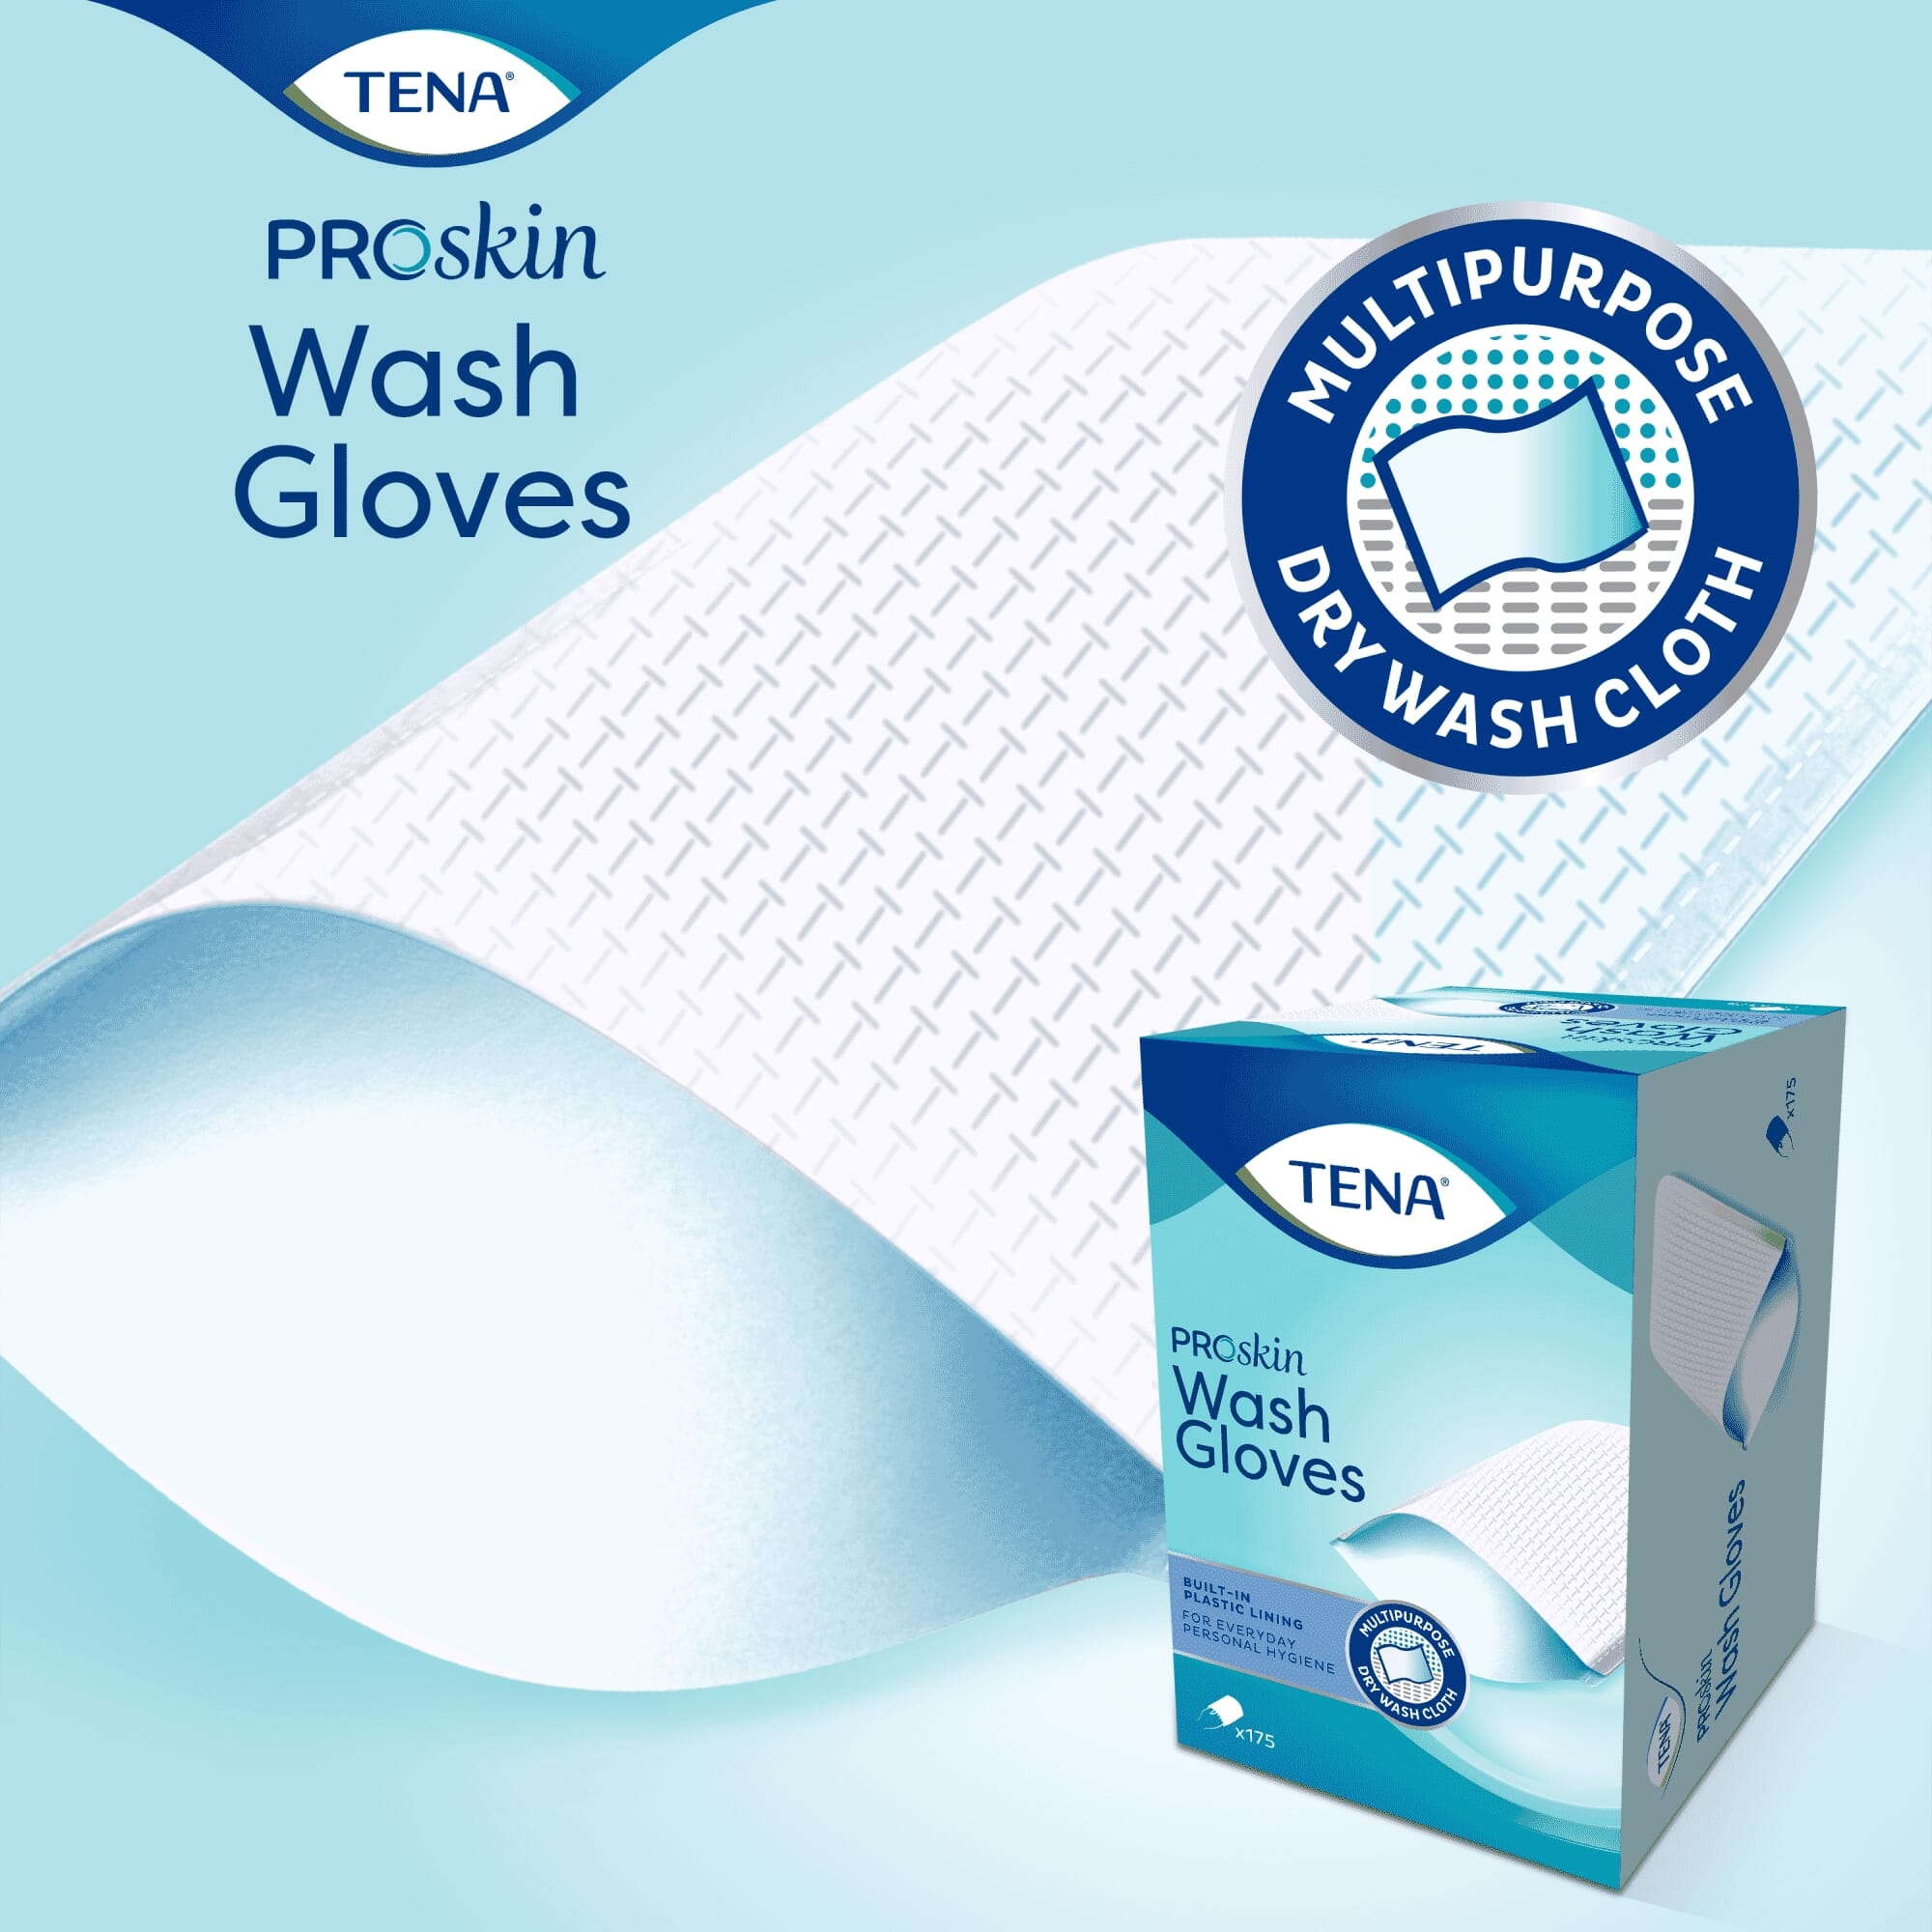 View Tena Disposable Wash Glove information